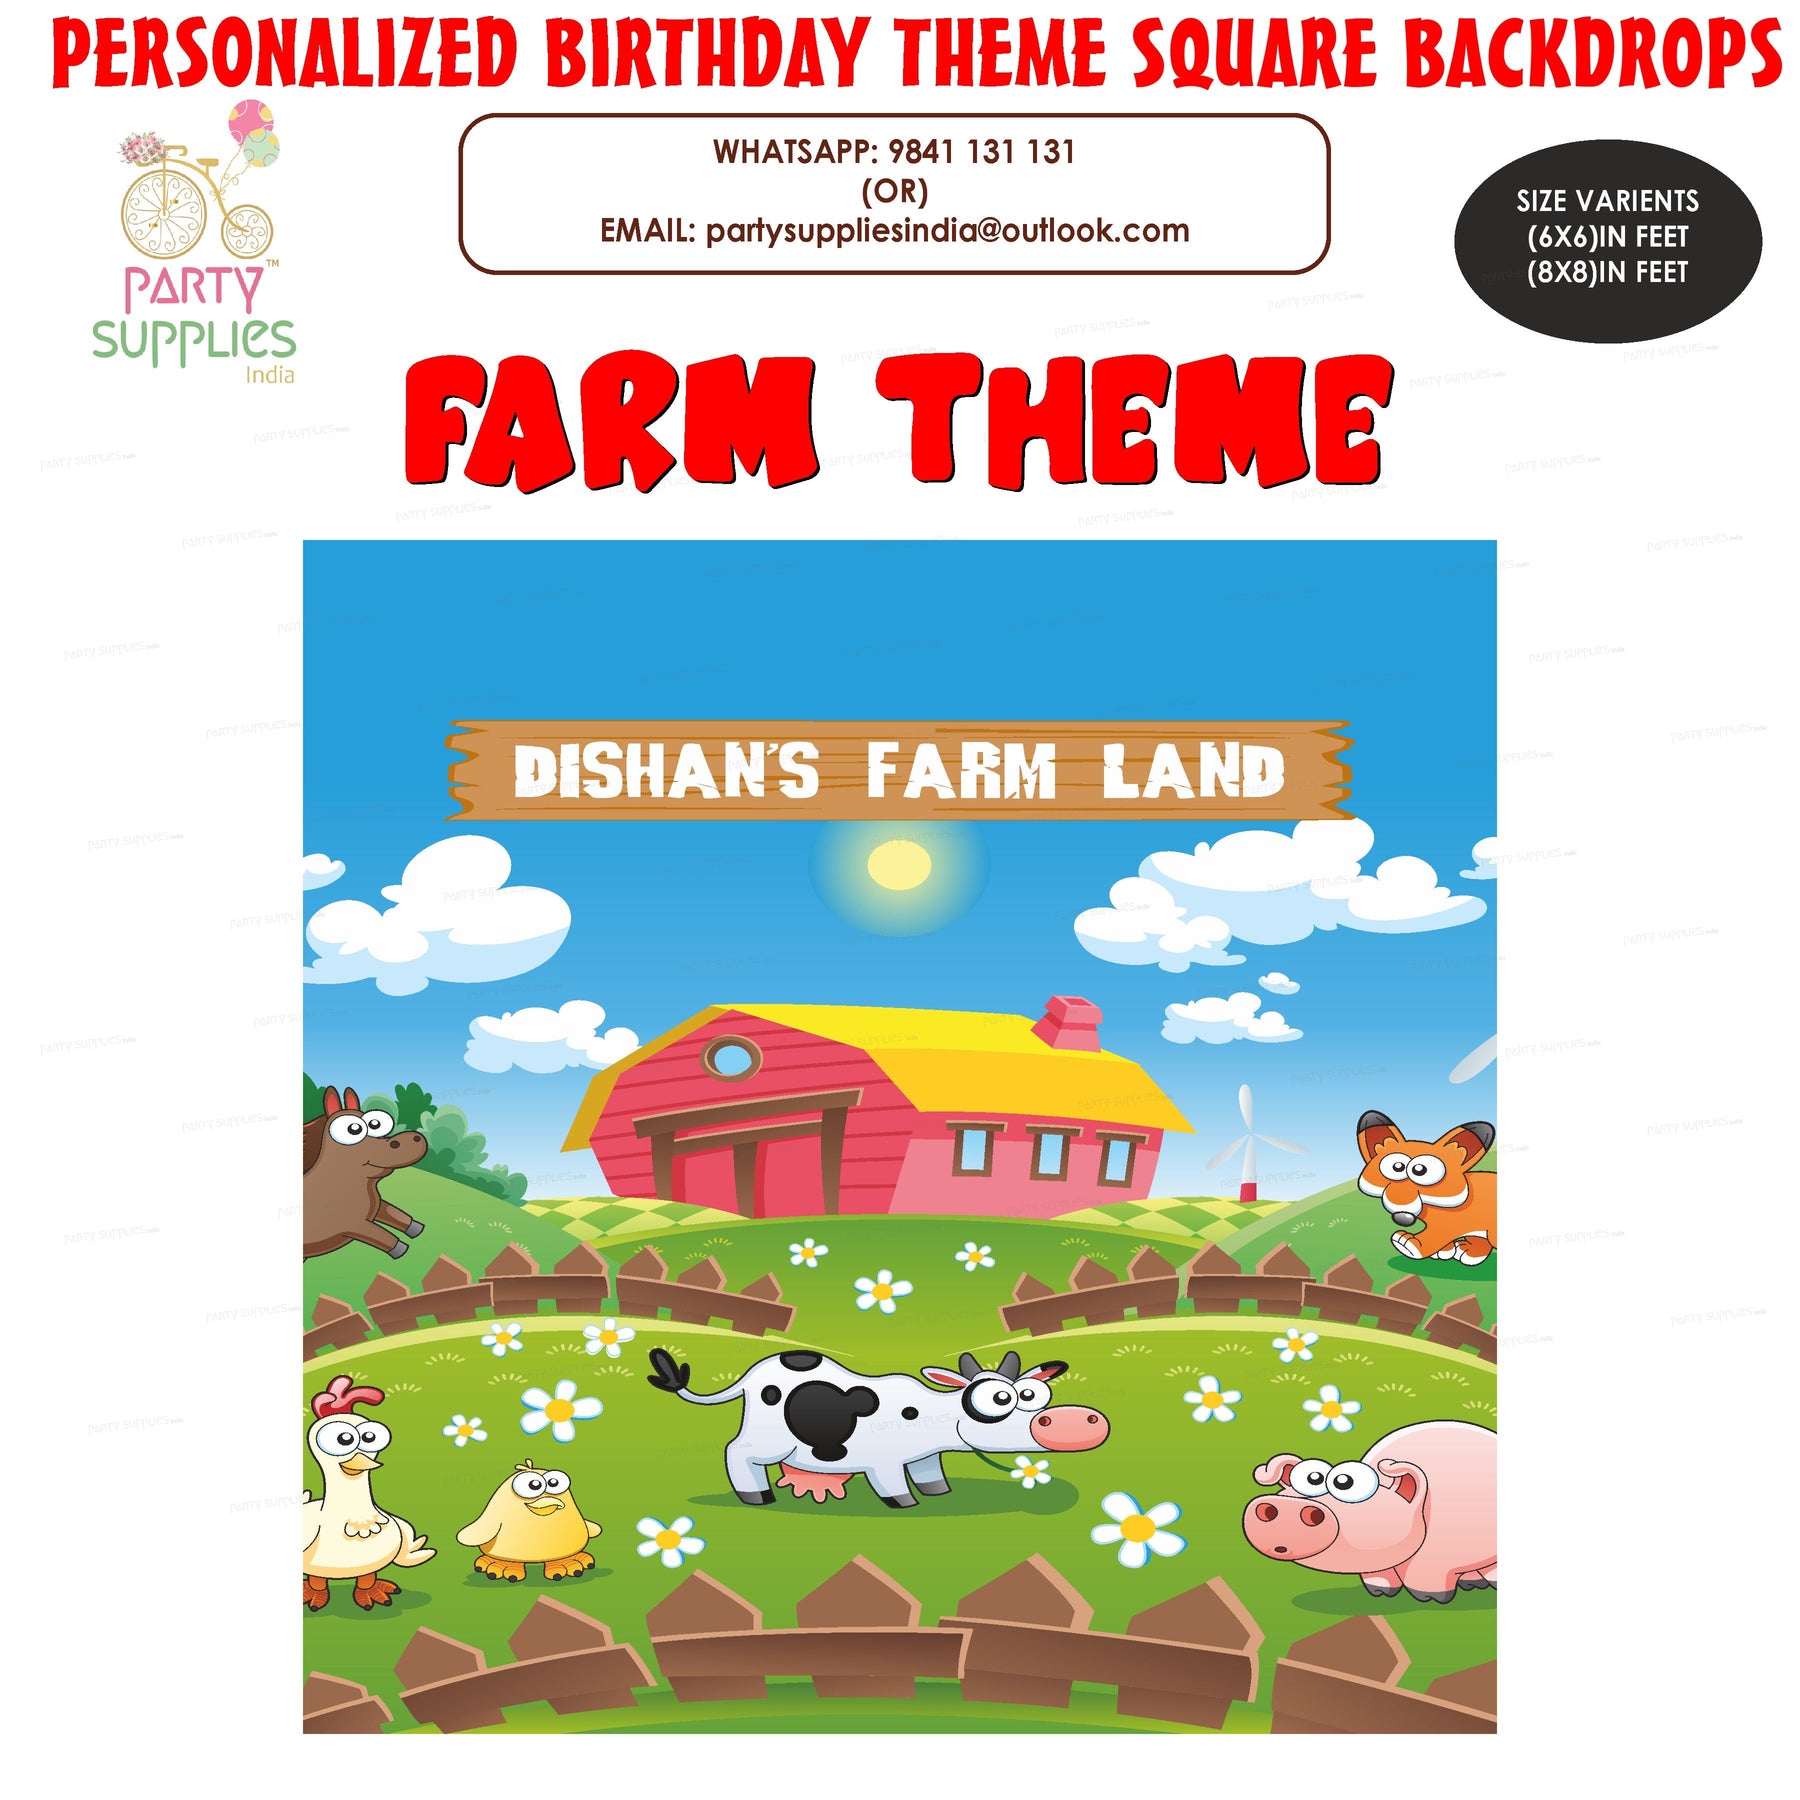 PSI Farm Theme Personalized Square Backdrop